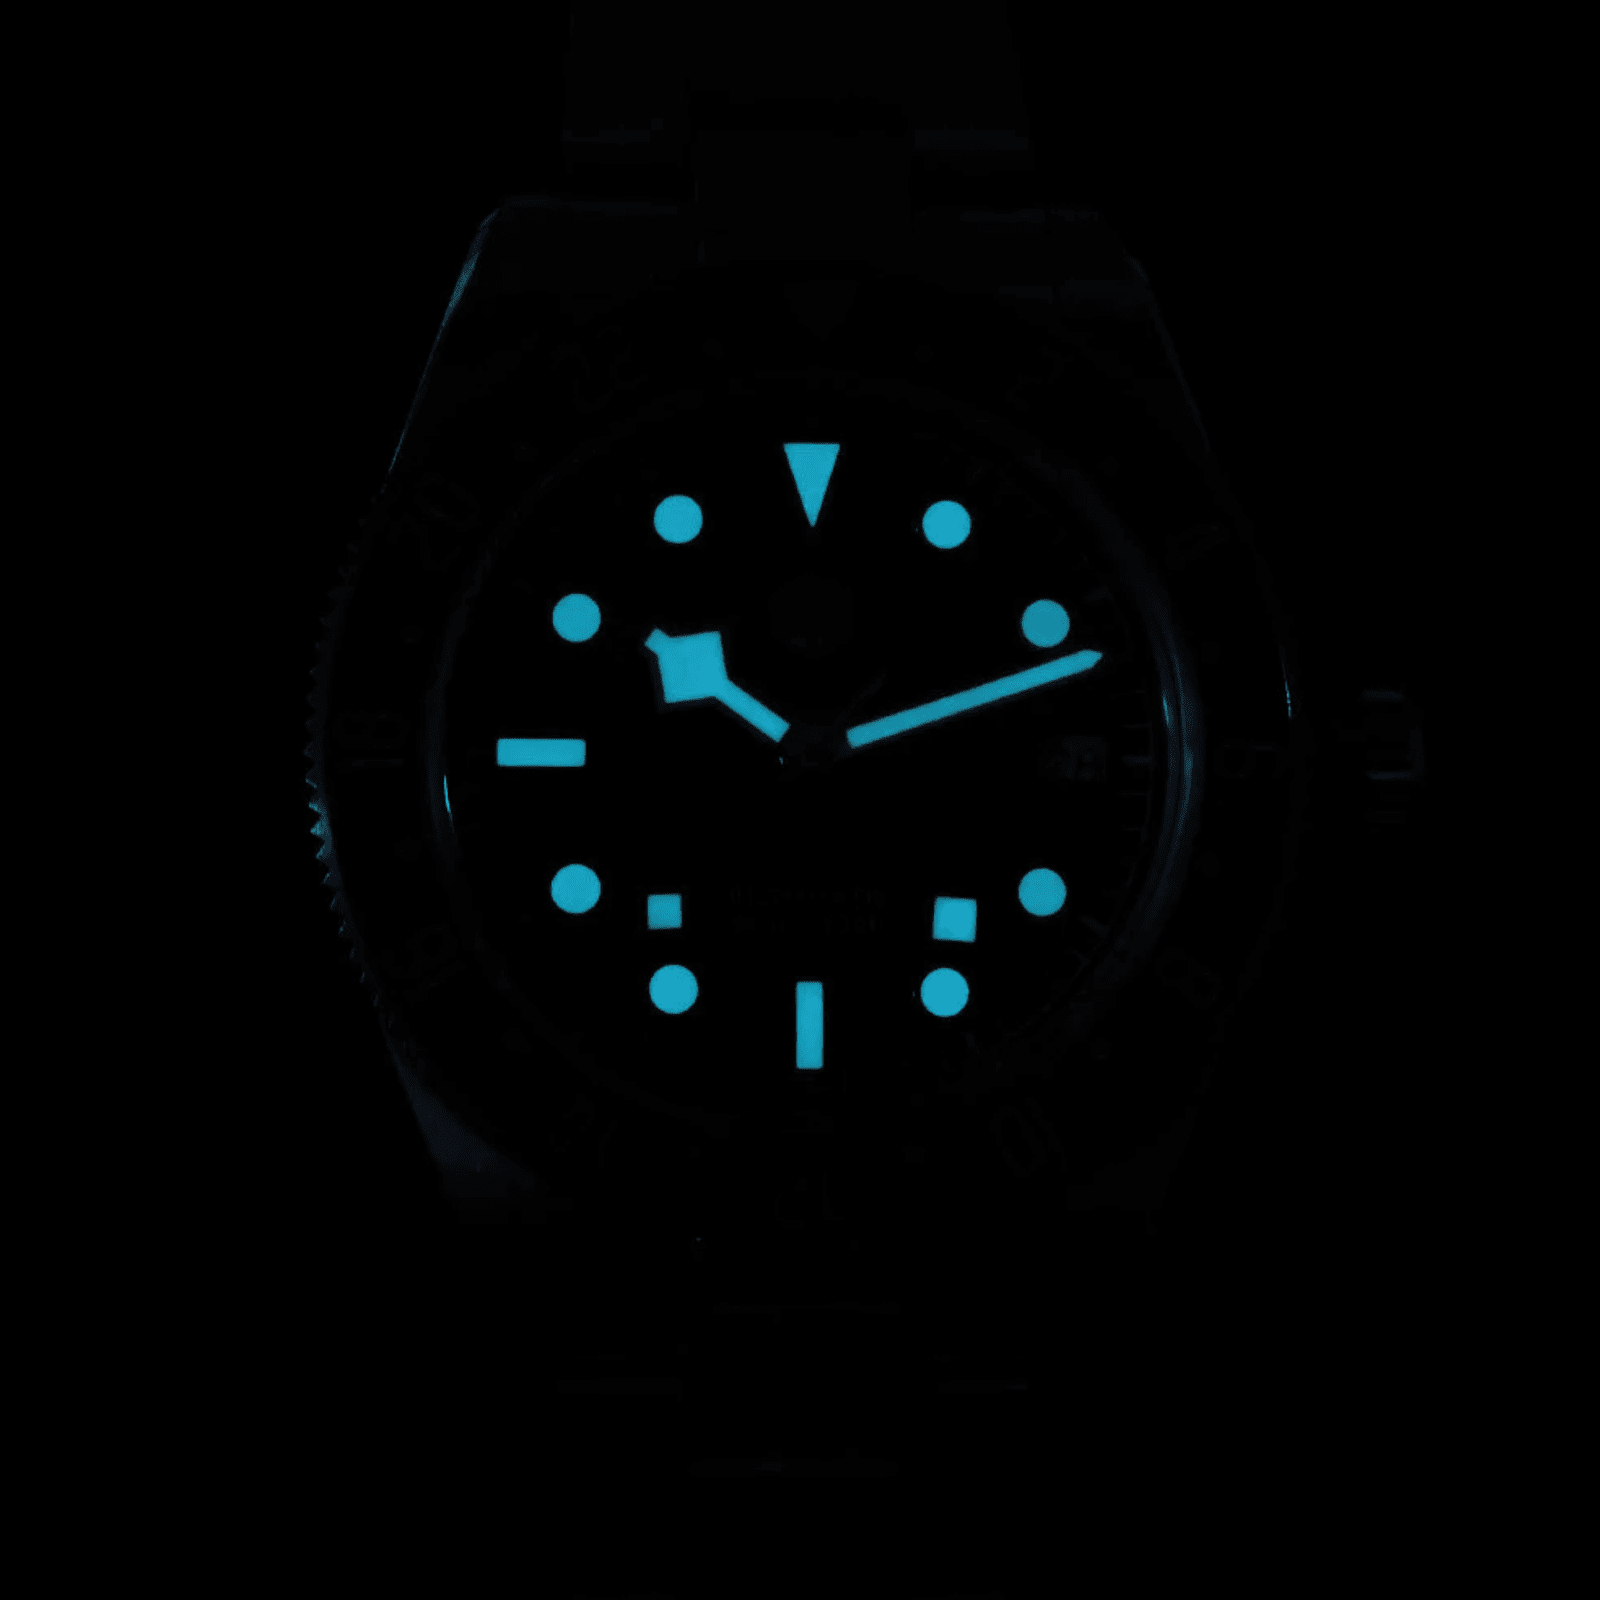 San Martin NH34 BB58 GMT Watch SN0109 - Black Dial san martin watches india online